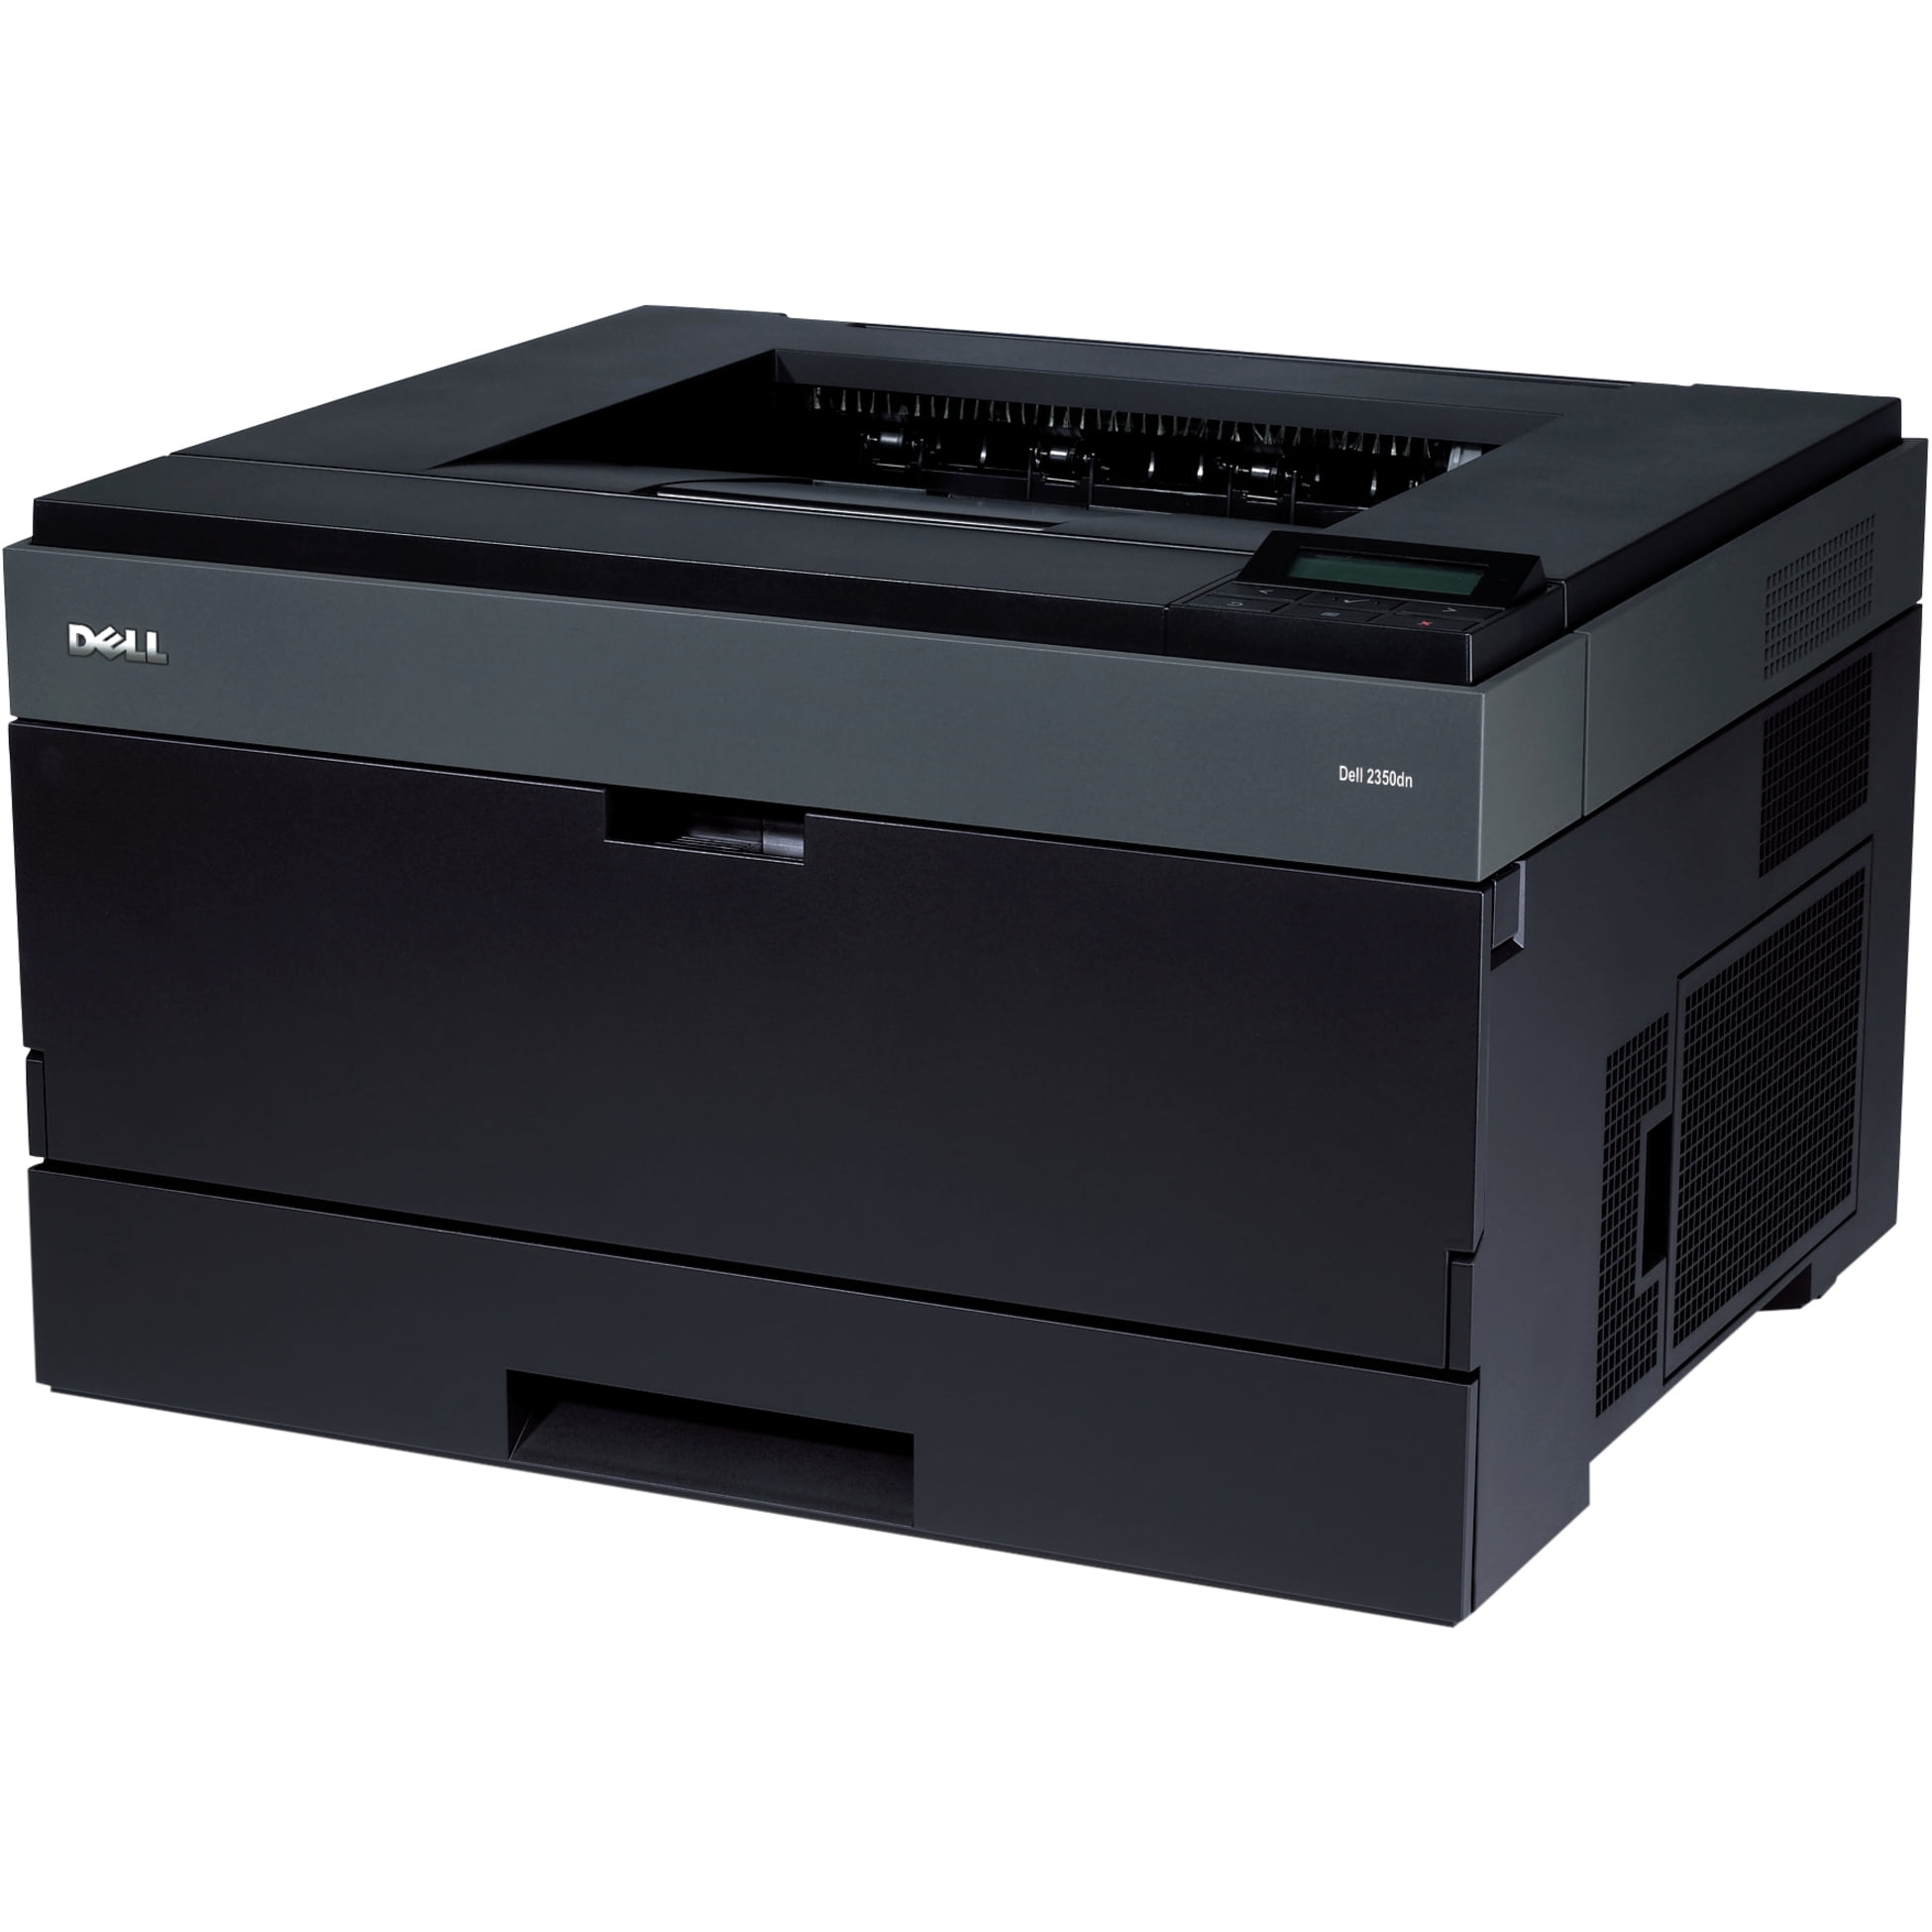 Dell Laser Printer - Walmart.com